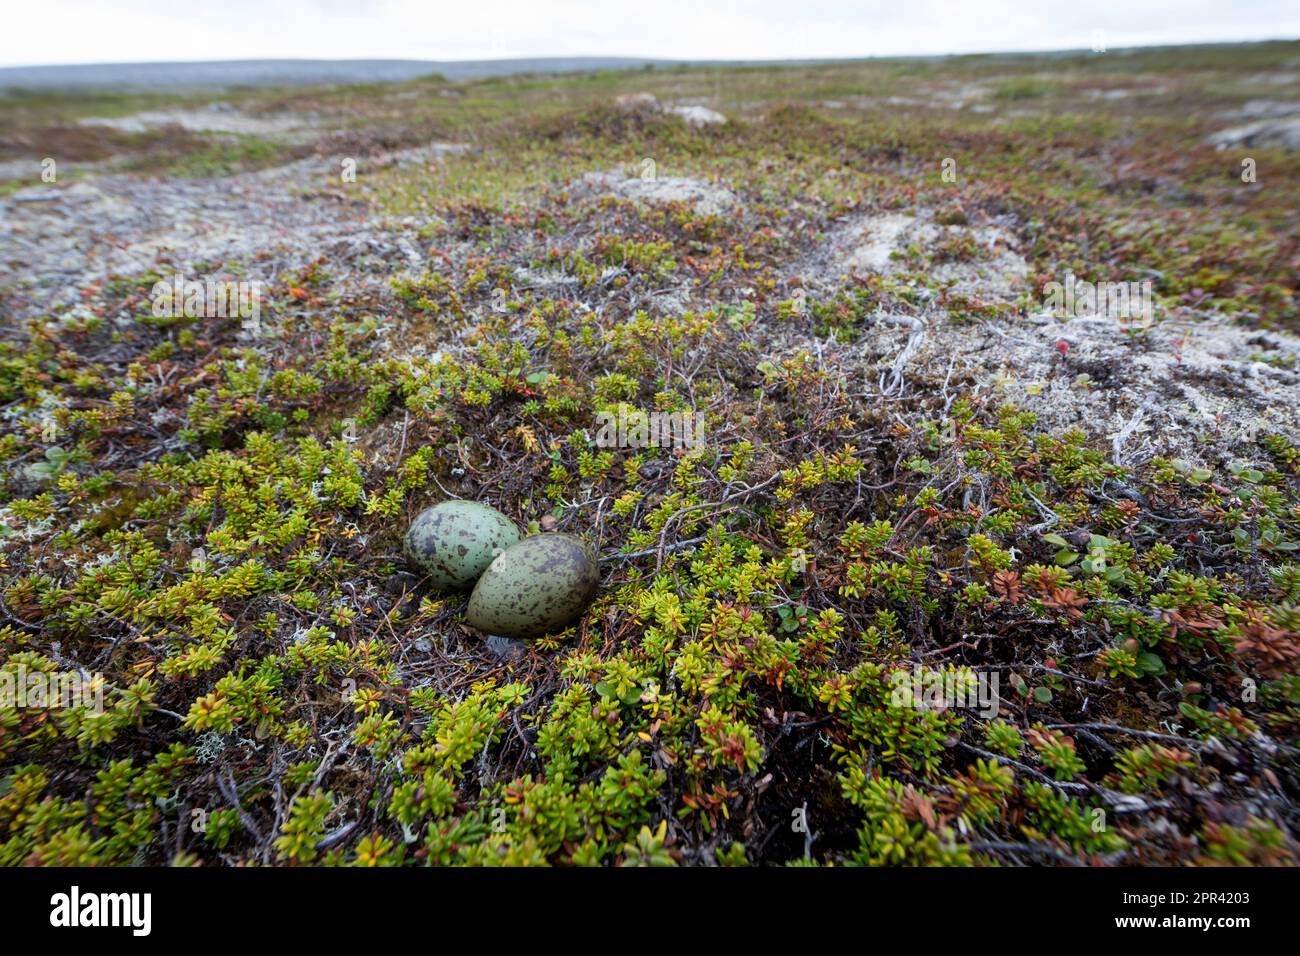 Langschwanzskua (Stercorarius longicaudus), Eier auf dem Boden zwischen Halophyten, Skandinavien Stockfoto